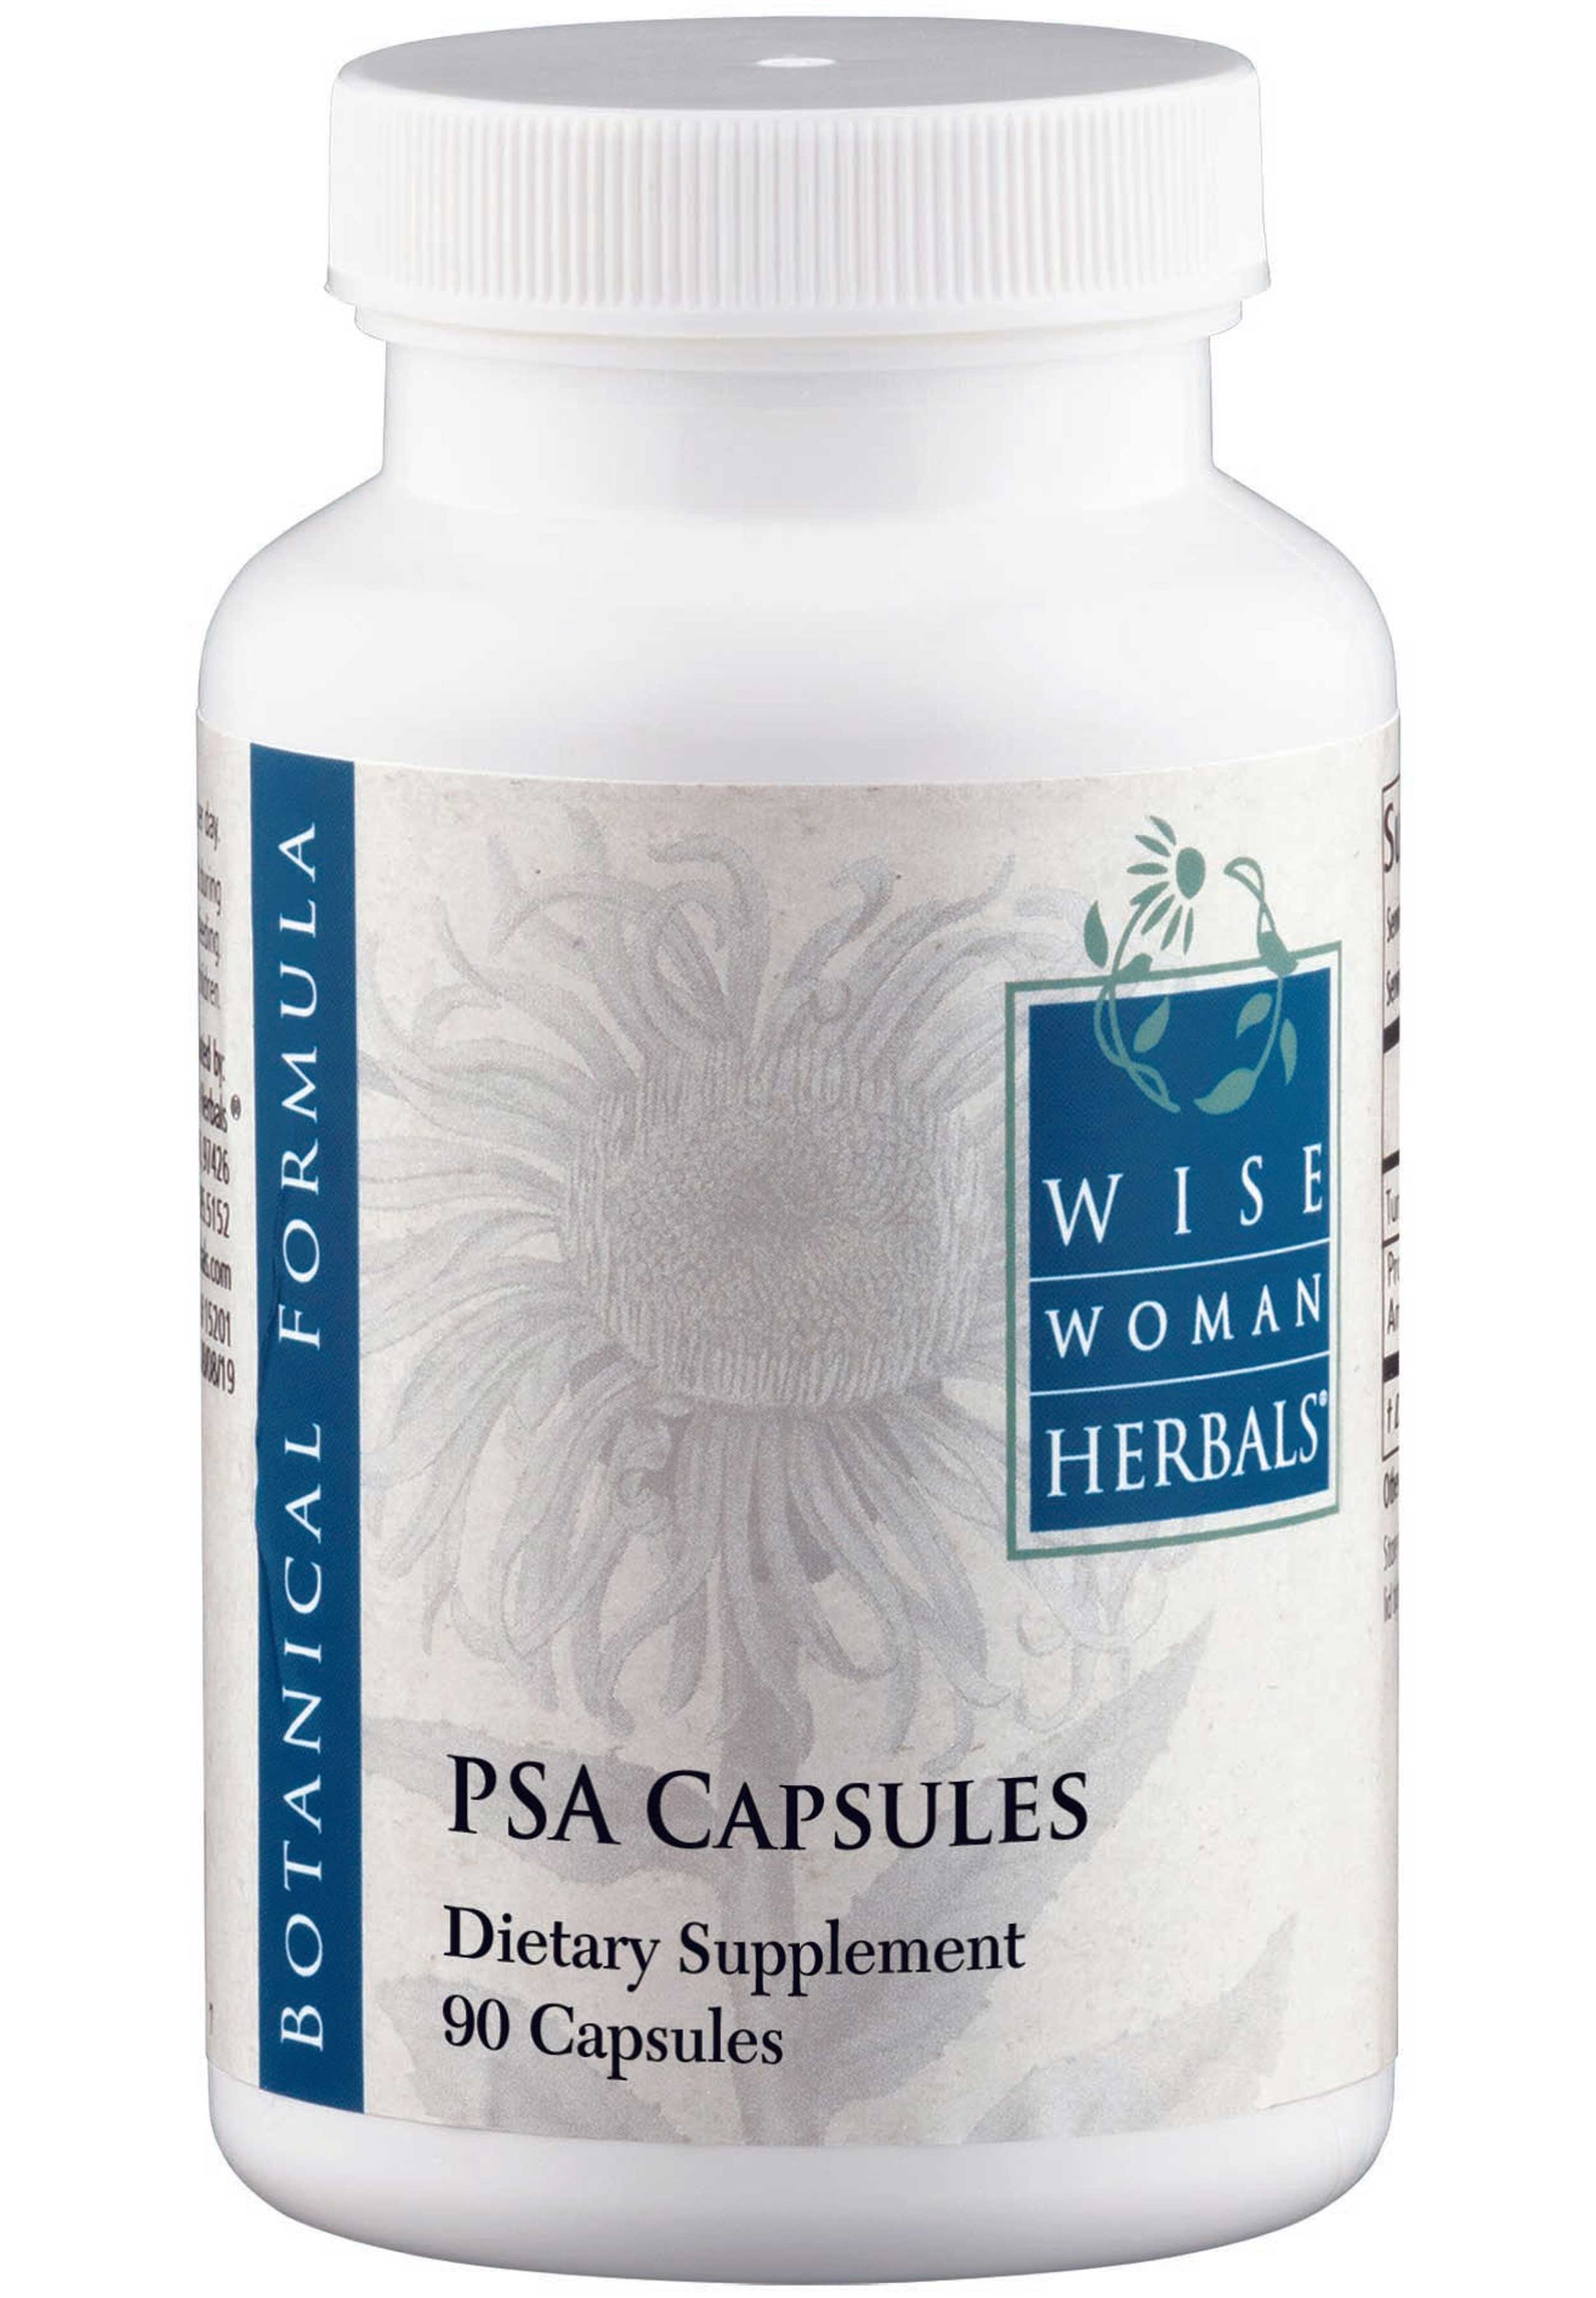 Wise Woman Herbals PSA Capsules